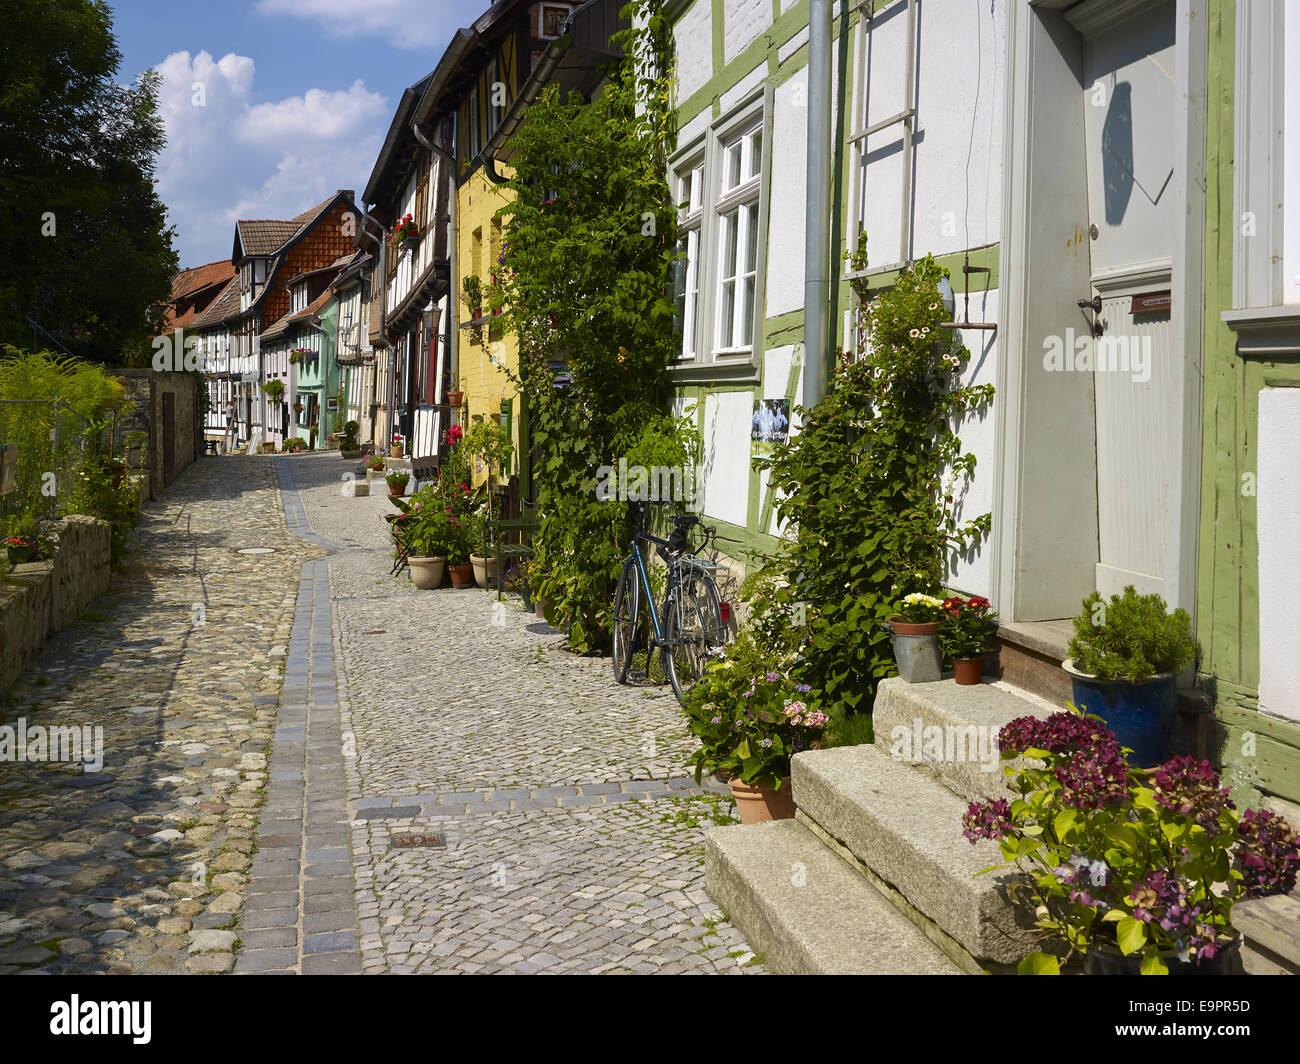 Houses at Schlossberg, Quedlinburg, Germany Stock Photo